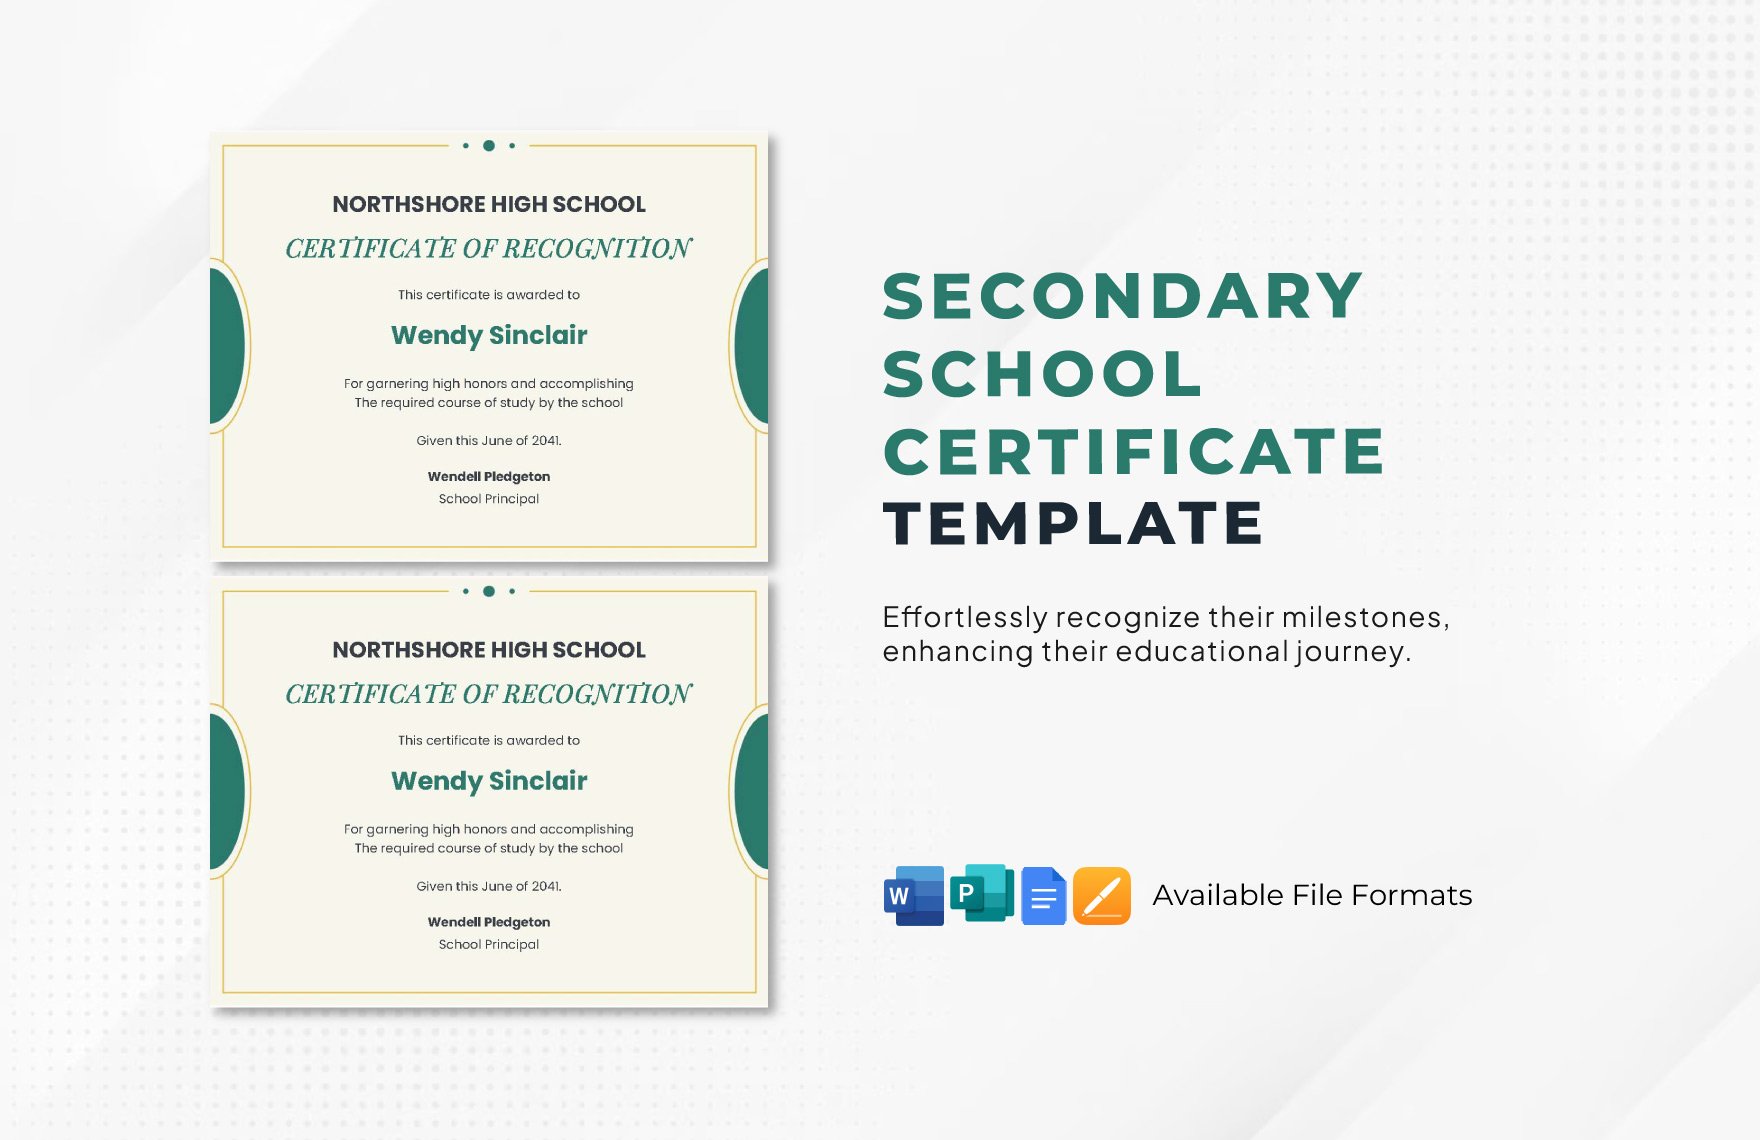 Secondary School Certificate Template